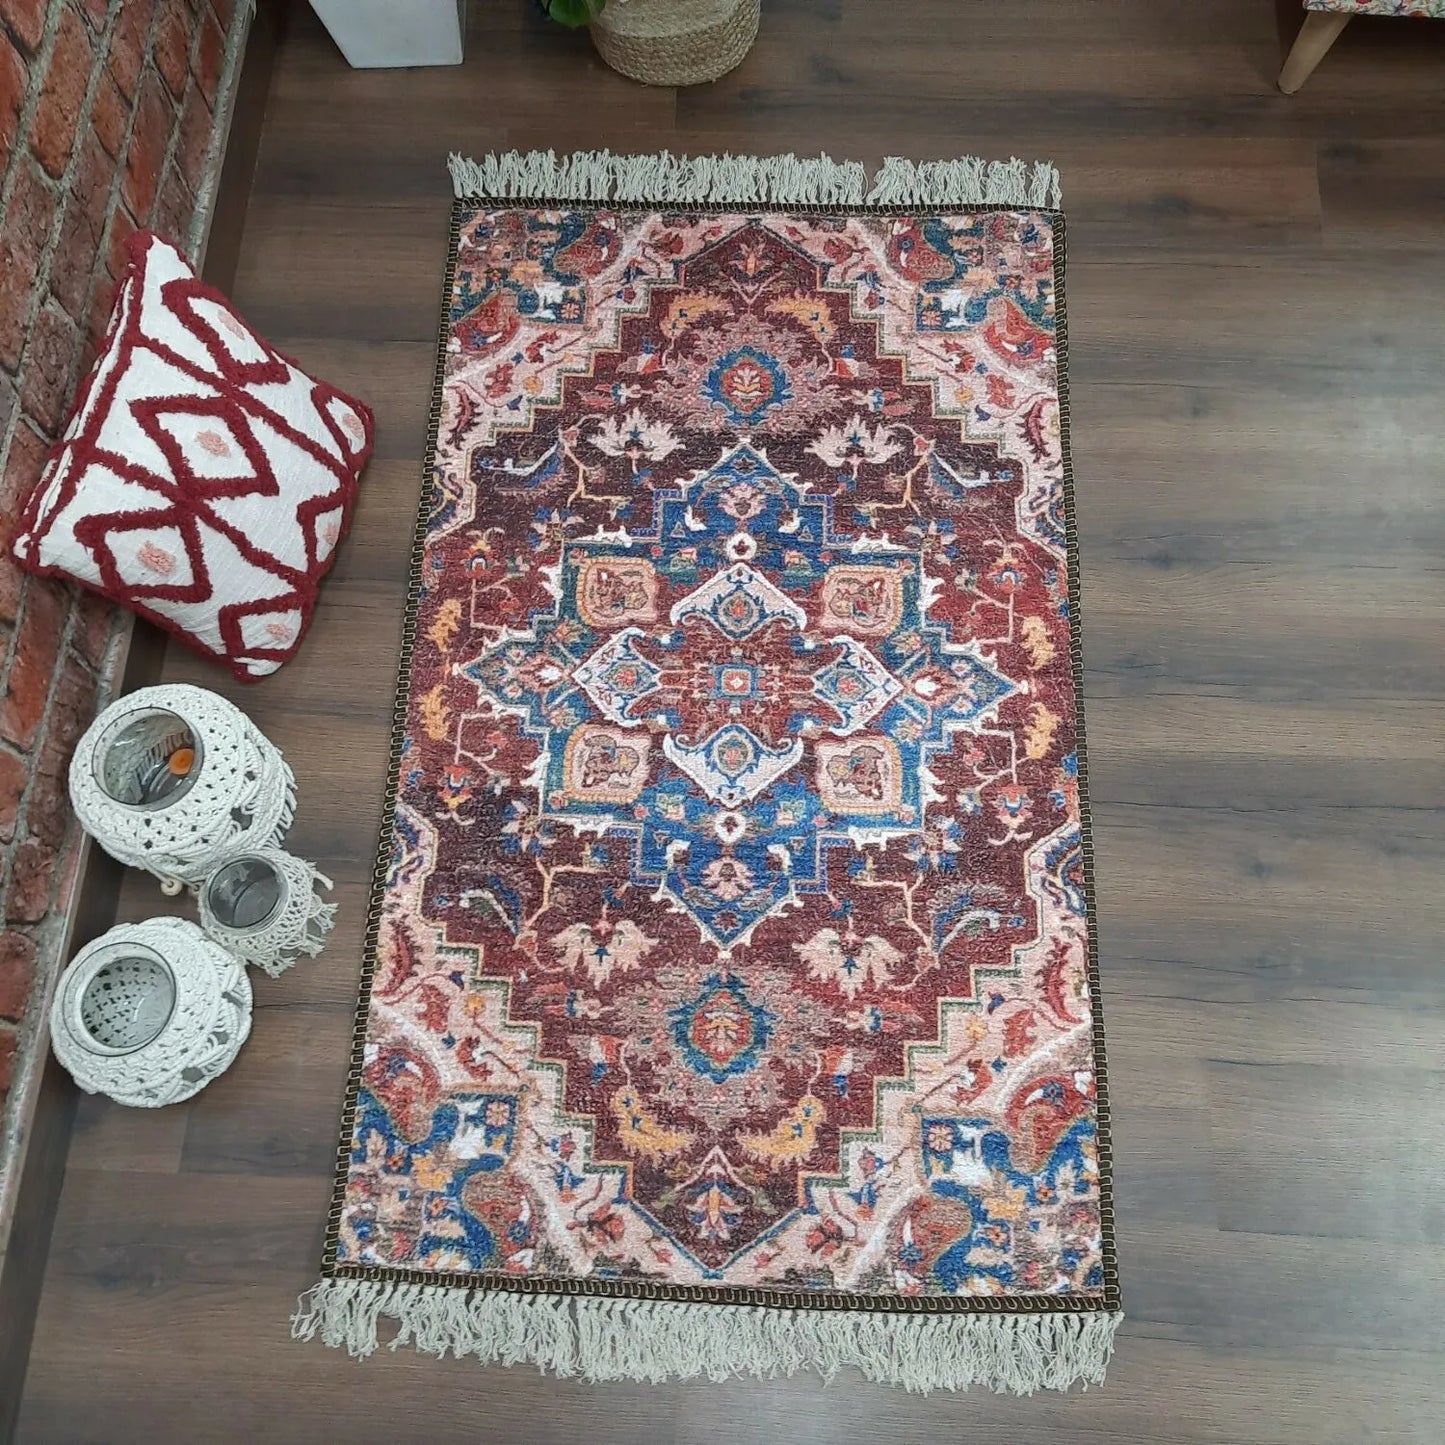 Avioni Home Washable Luxury Carpets – Ethnic Design